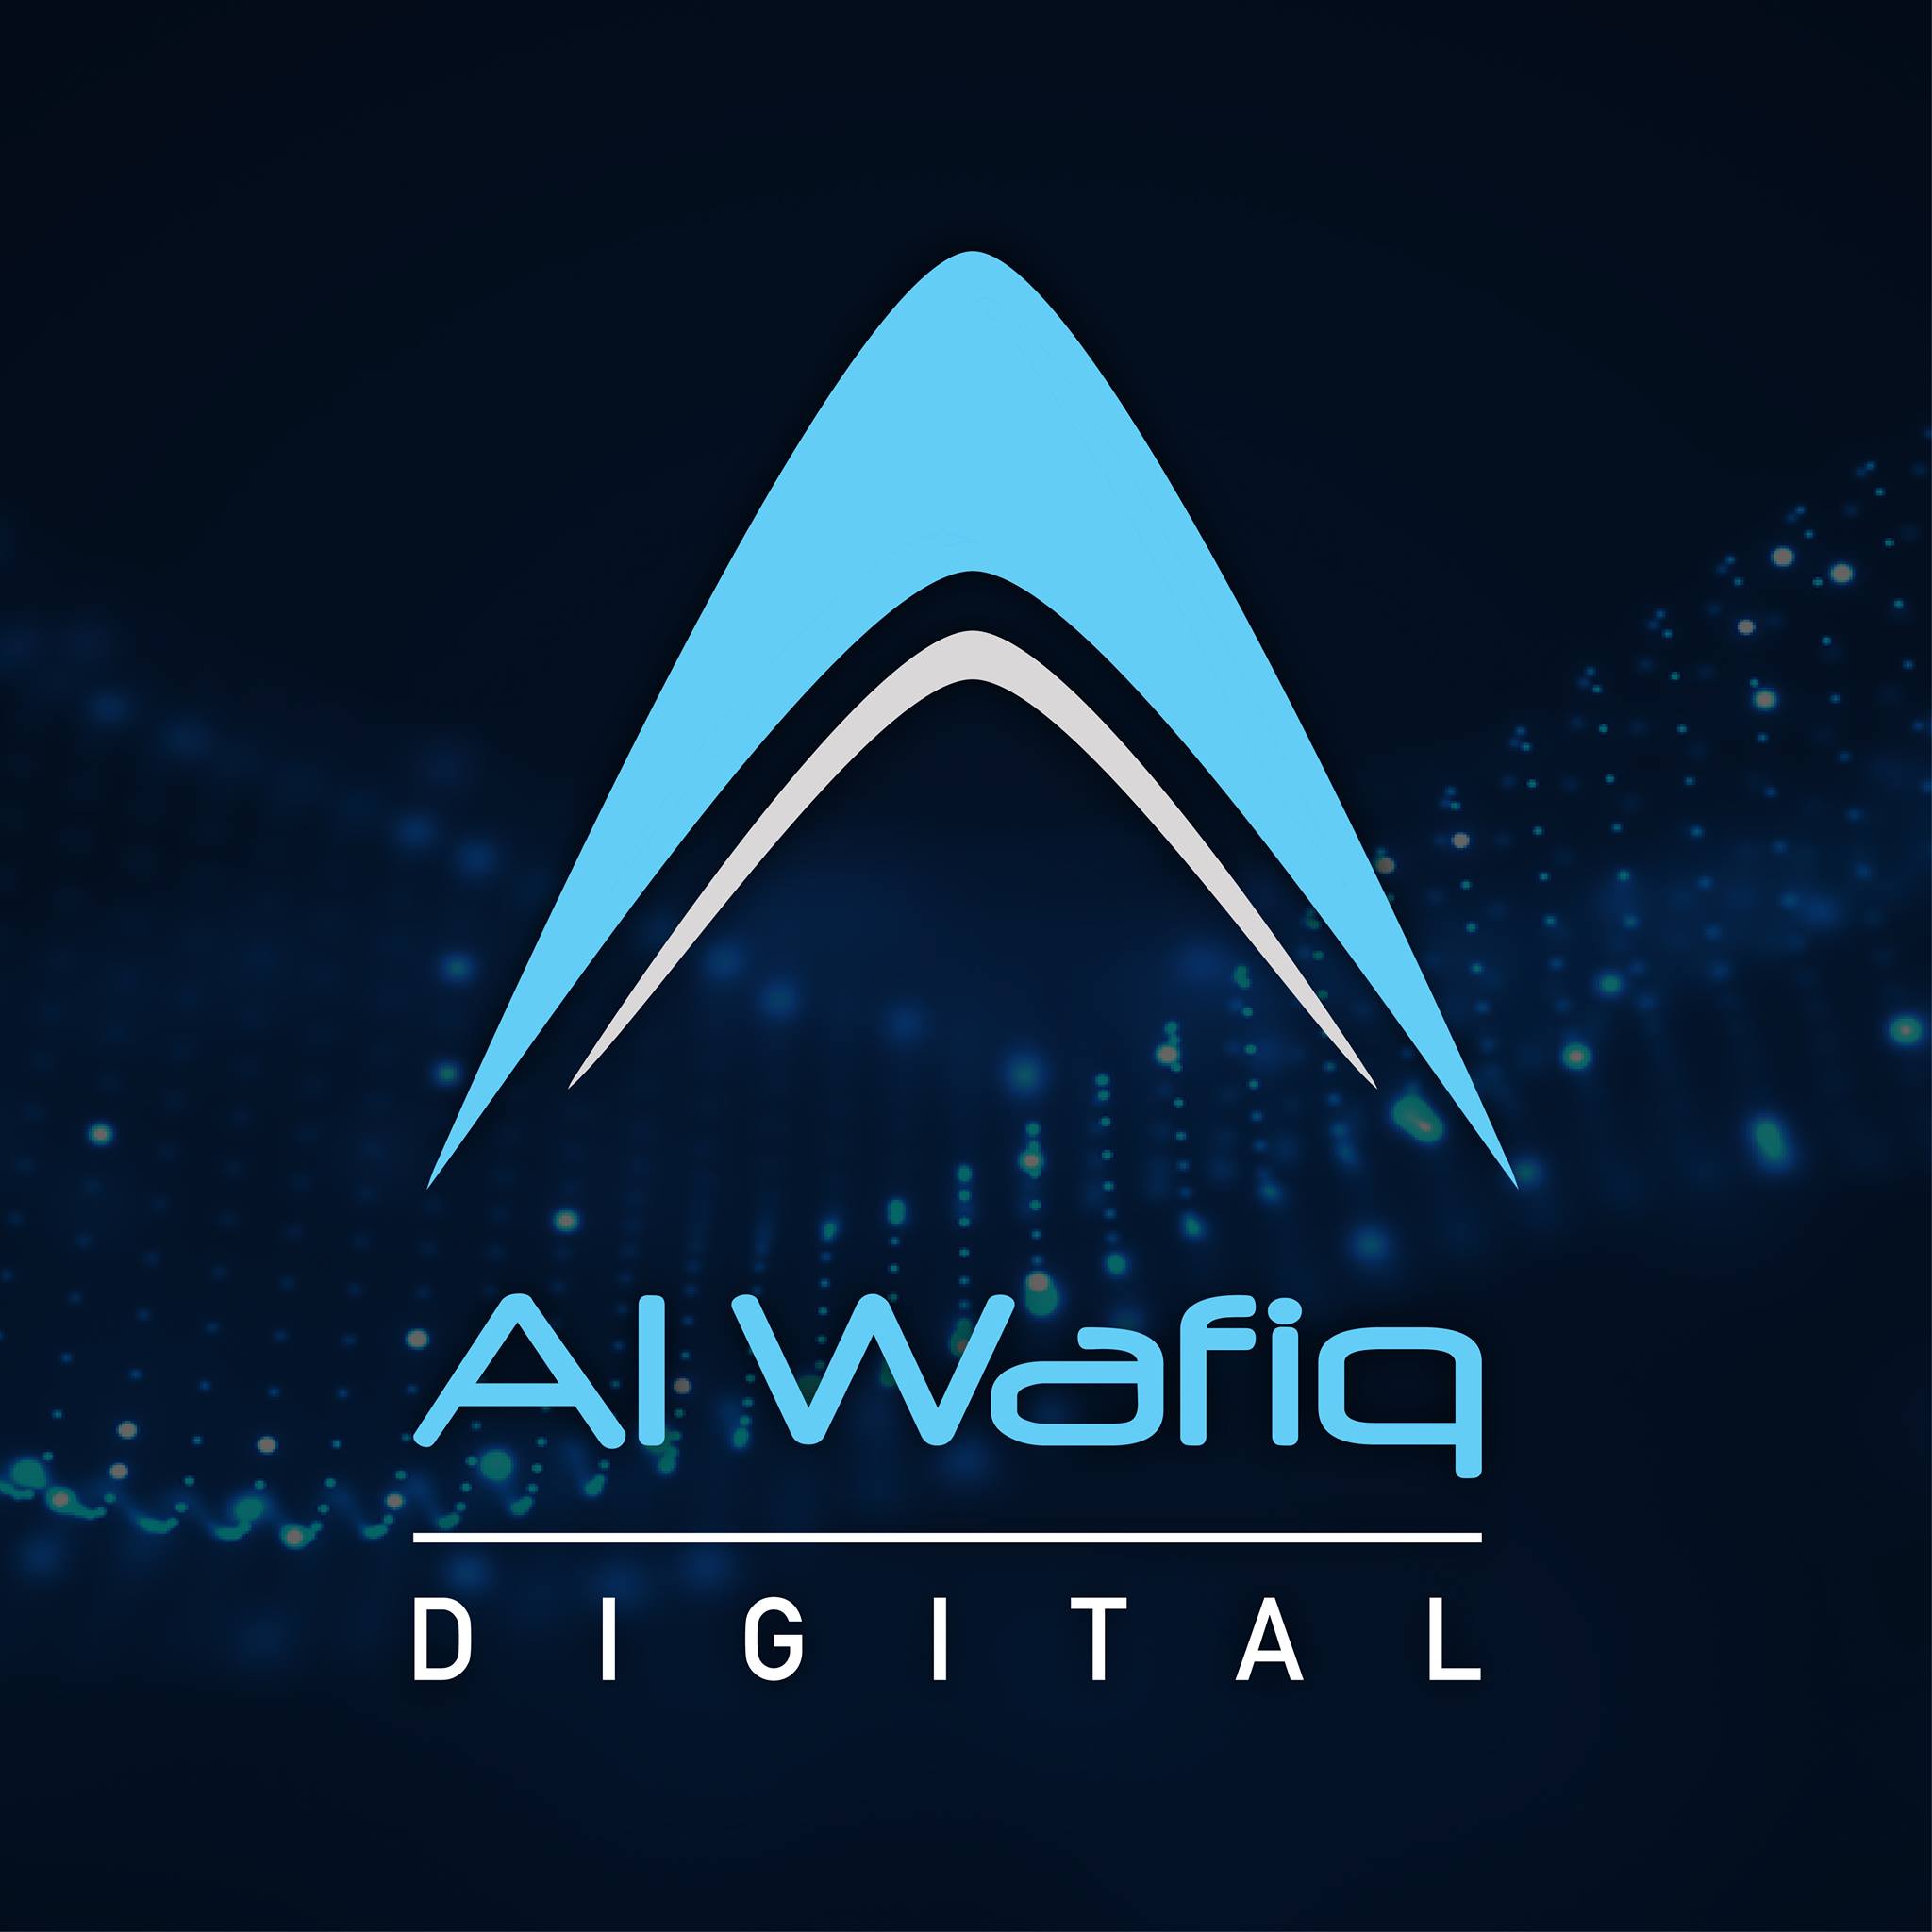 Top Digital Marketing, Website Designing & SEO Agency Dubai, UAE